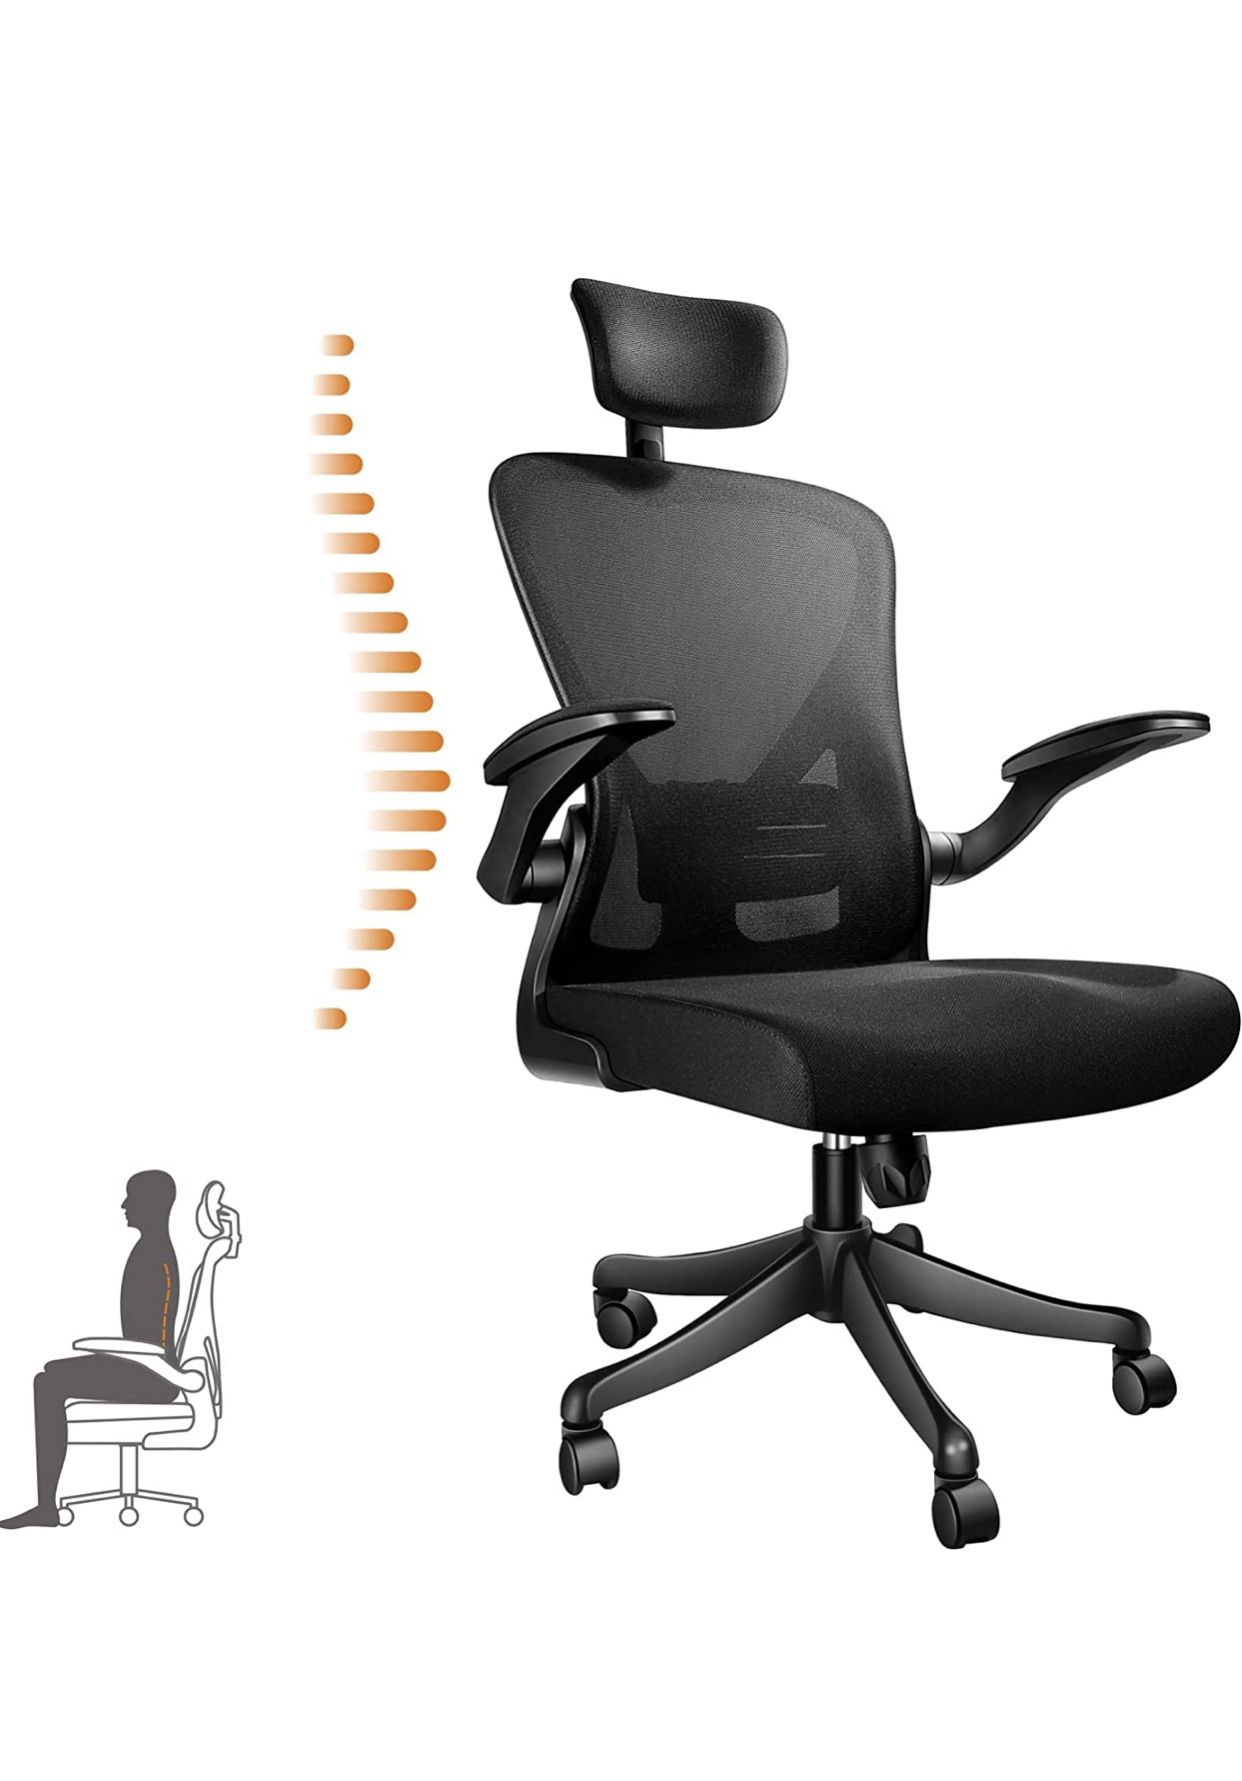 Ergonomic Office Mesh Chair